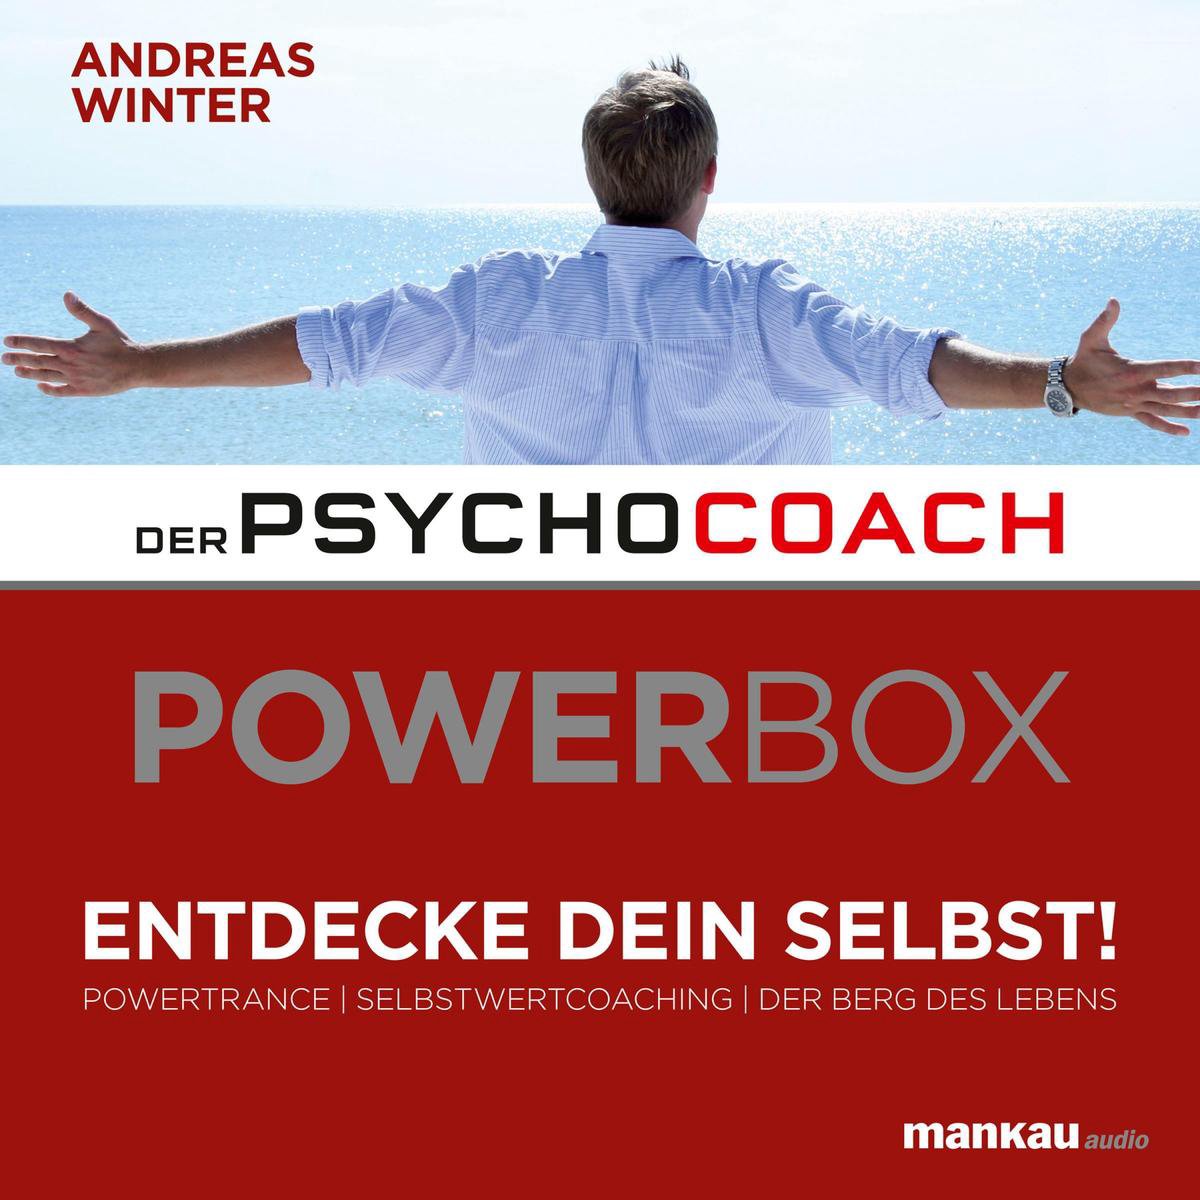 Der Psychocoach: Power-Box - Andreas Winter